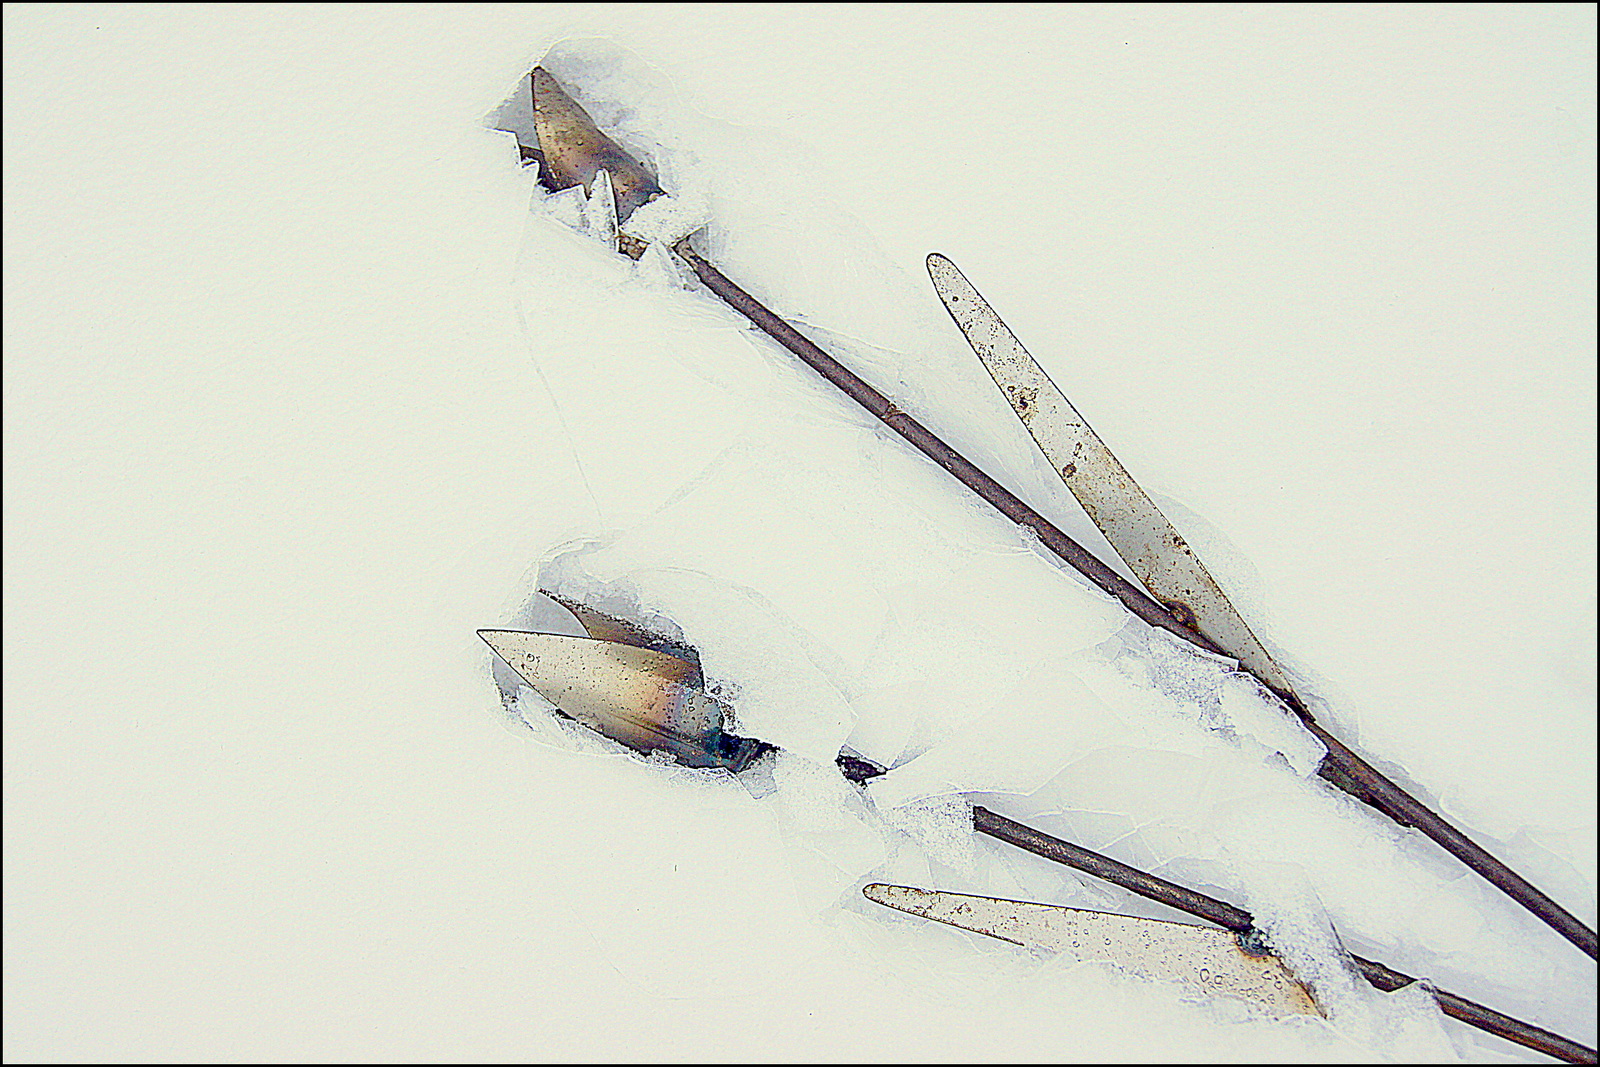 Metalltulpen im Schnee